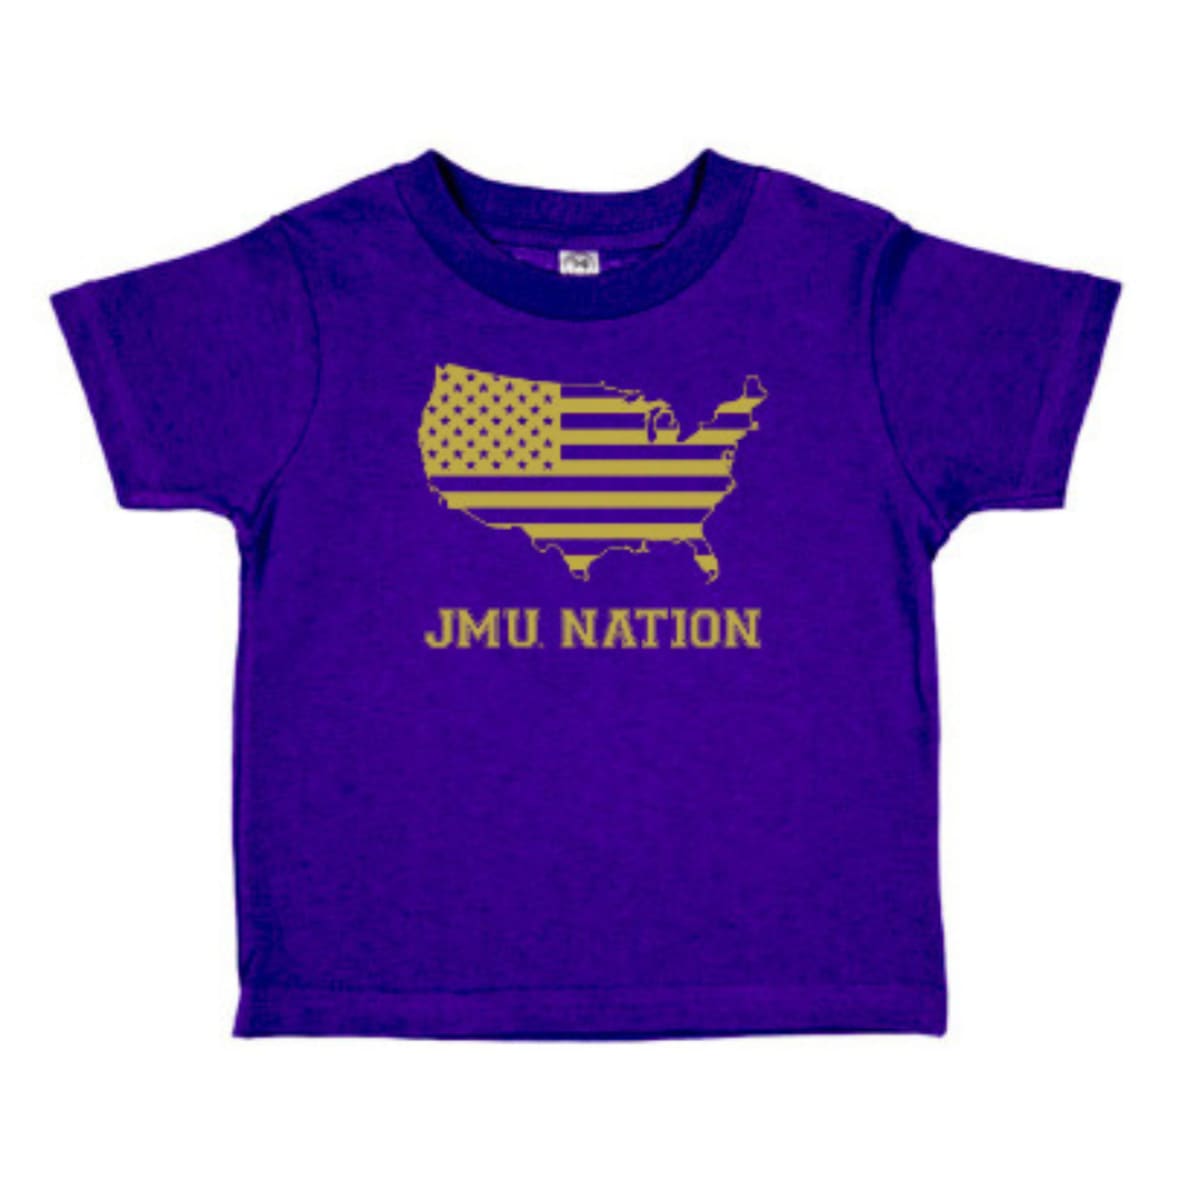 JMU Nation Infant/Child Short Sleeve - 6 MO. / PURPLE